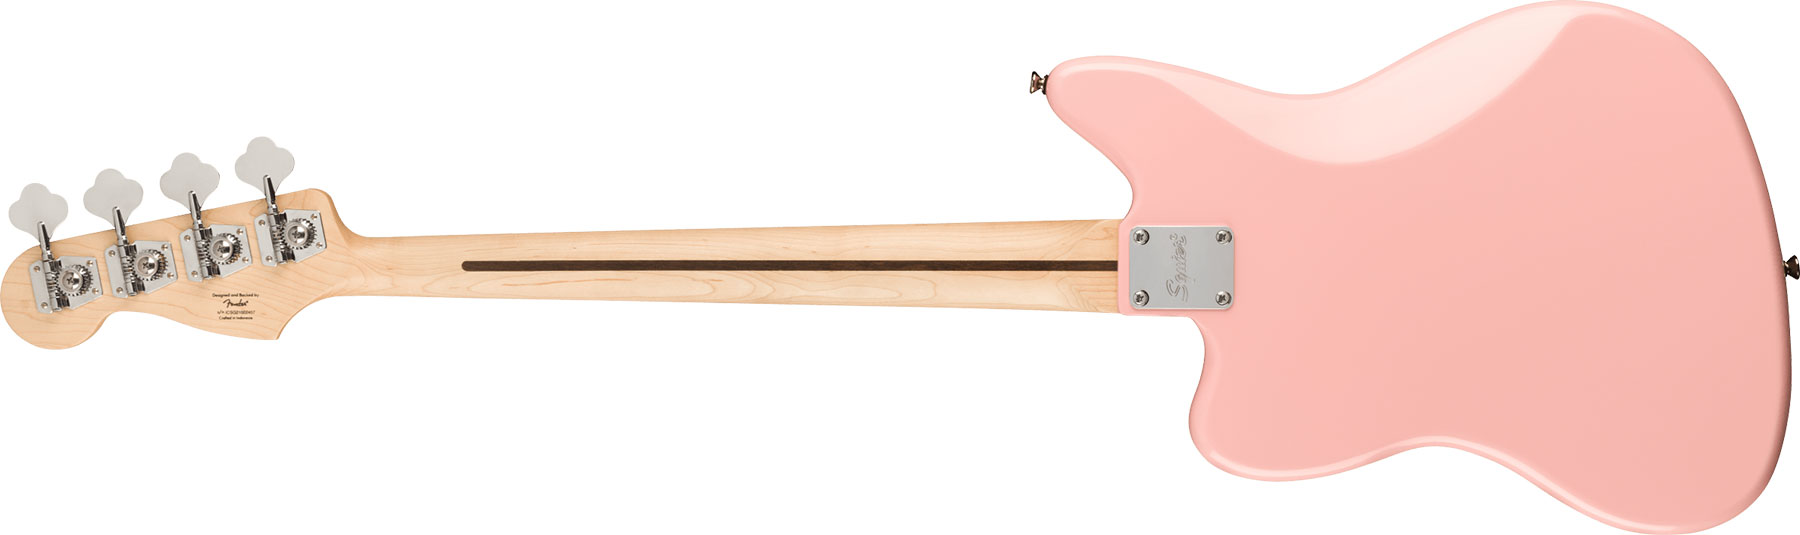 Squier Jaguar Bass H Affinity Fsr Lau - Shell Pink - Basse Électrique Solid Body - Variation 1